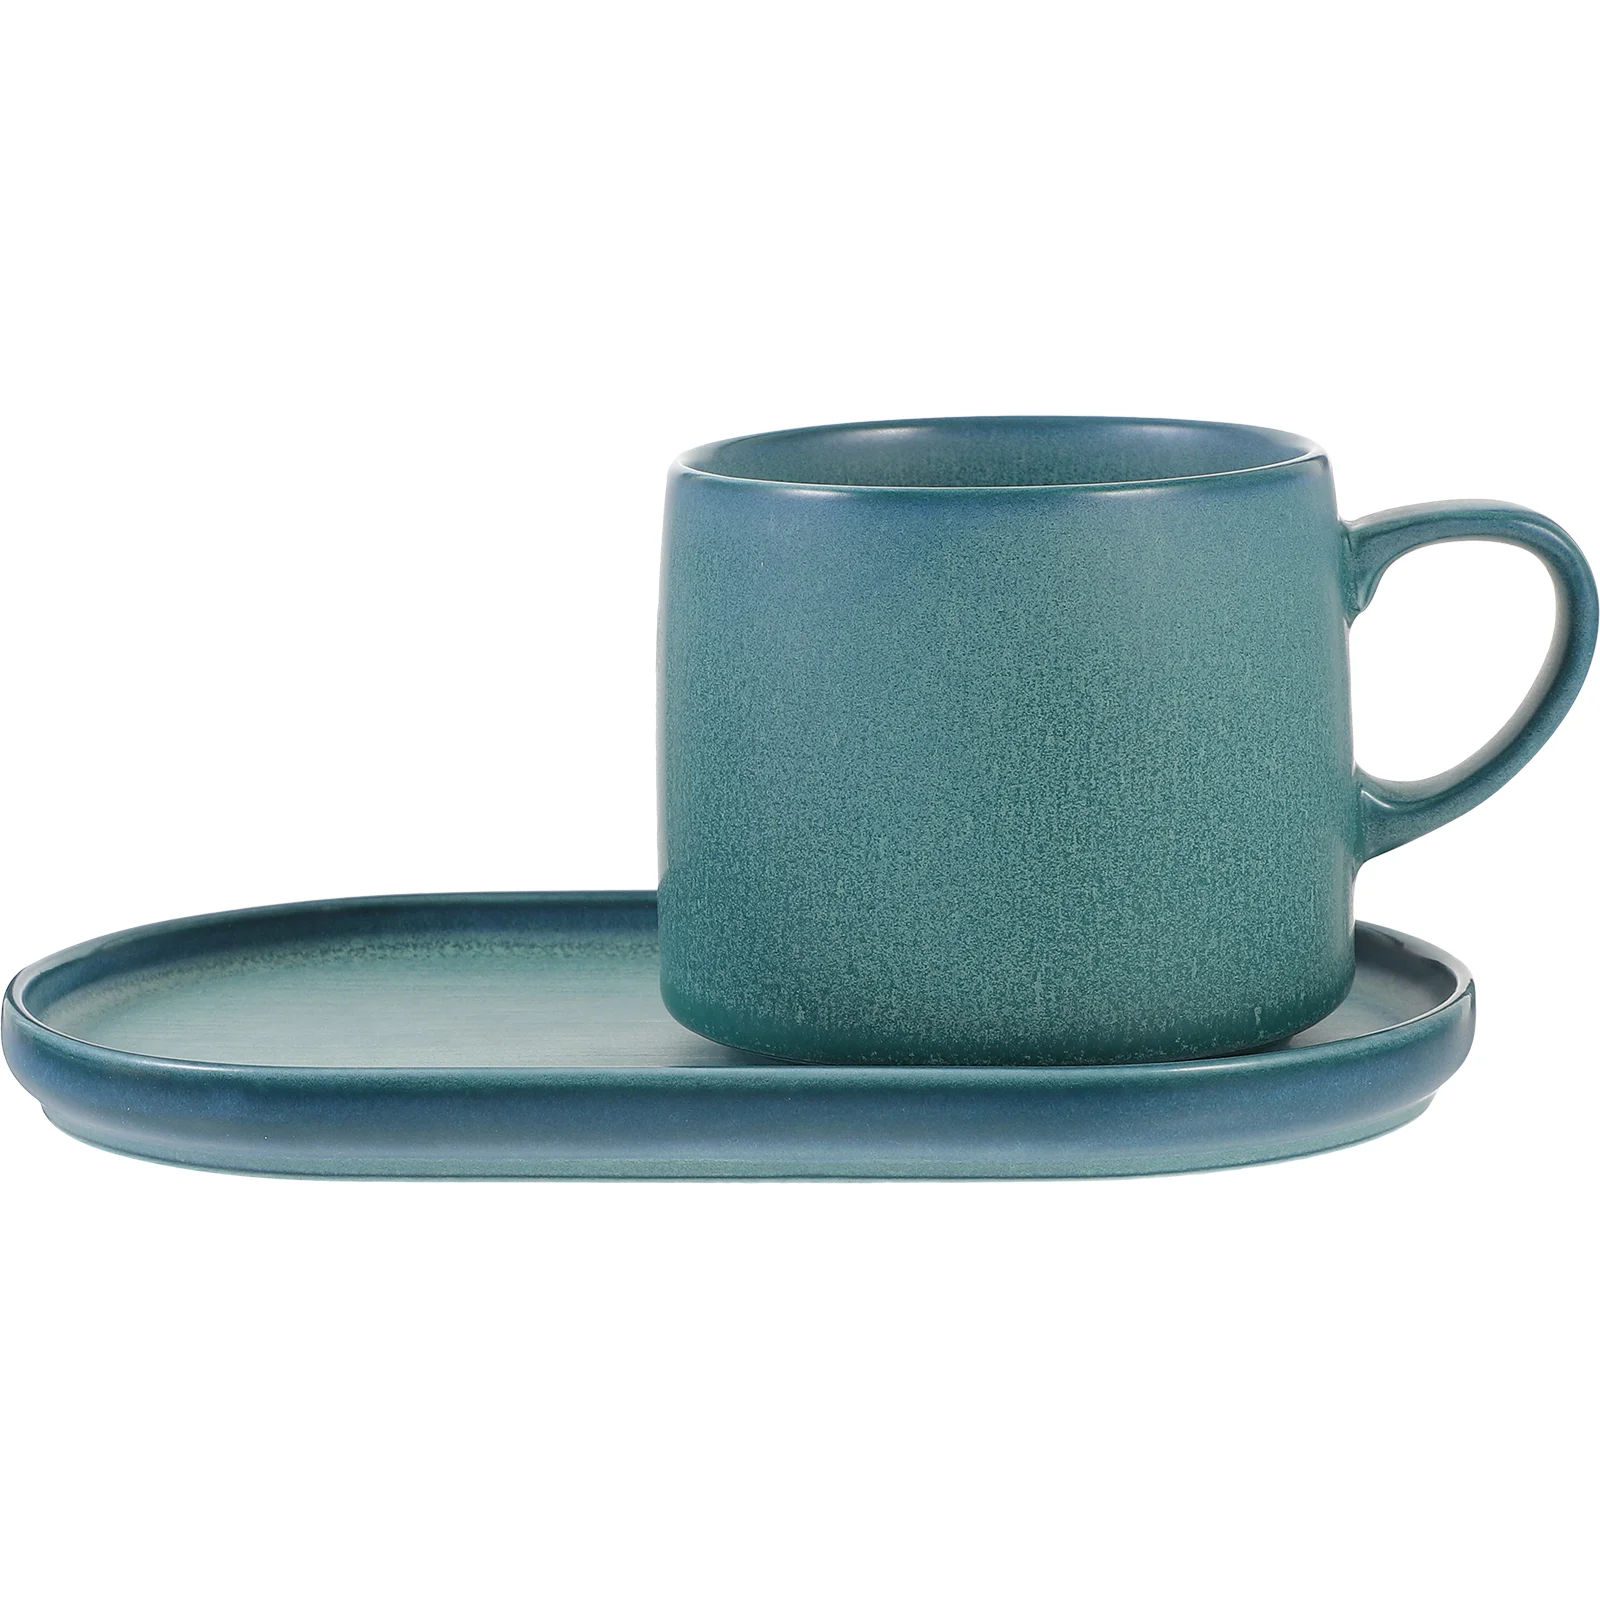 

Desktop Coffee Cup Ceramic Mug Decorative Water Household With Saucer Mugs Serving Utensils